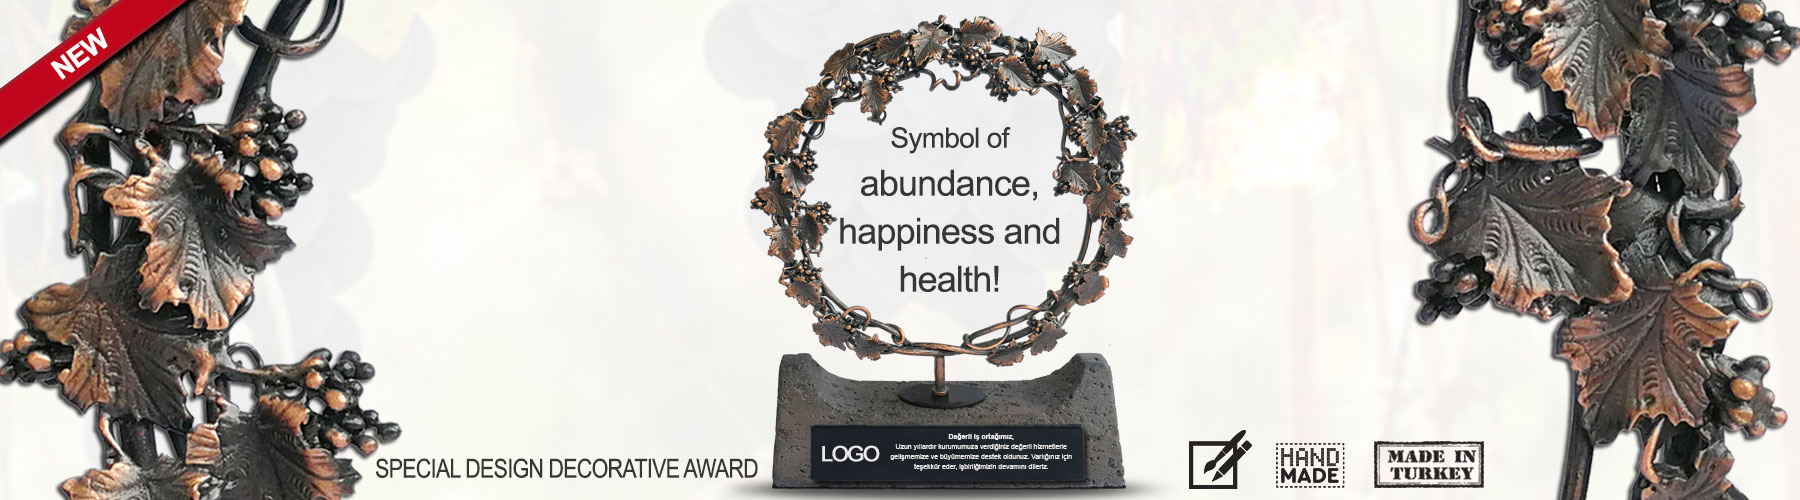 Abundance, happiness end health themed decorative award plaque